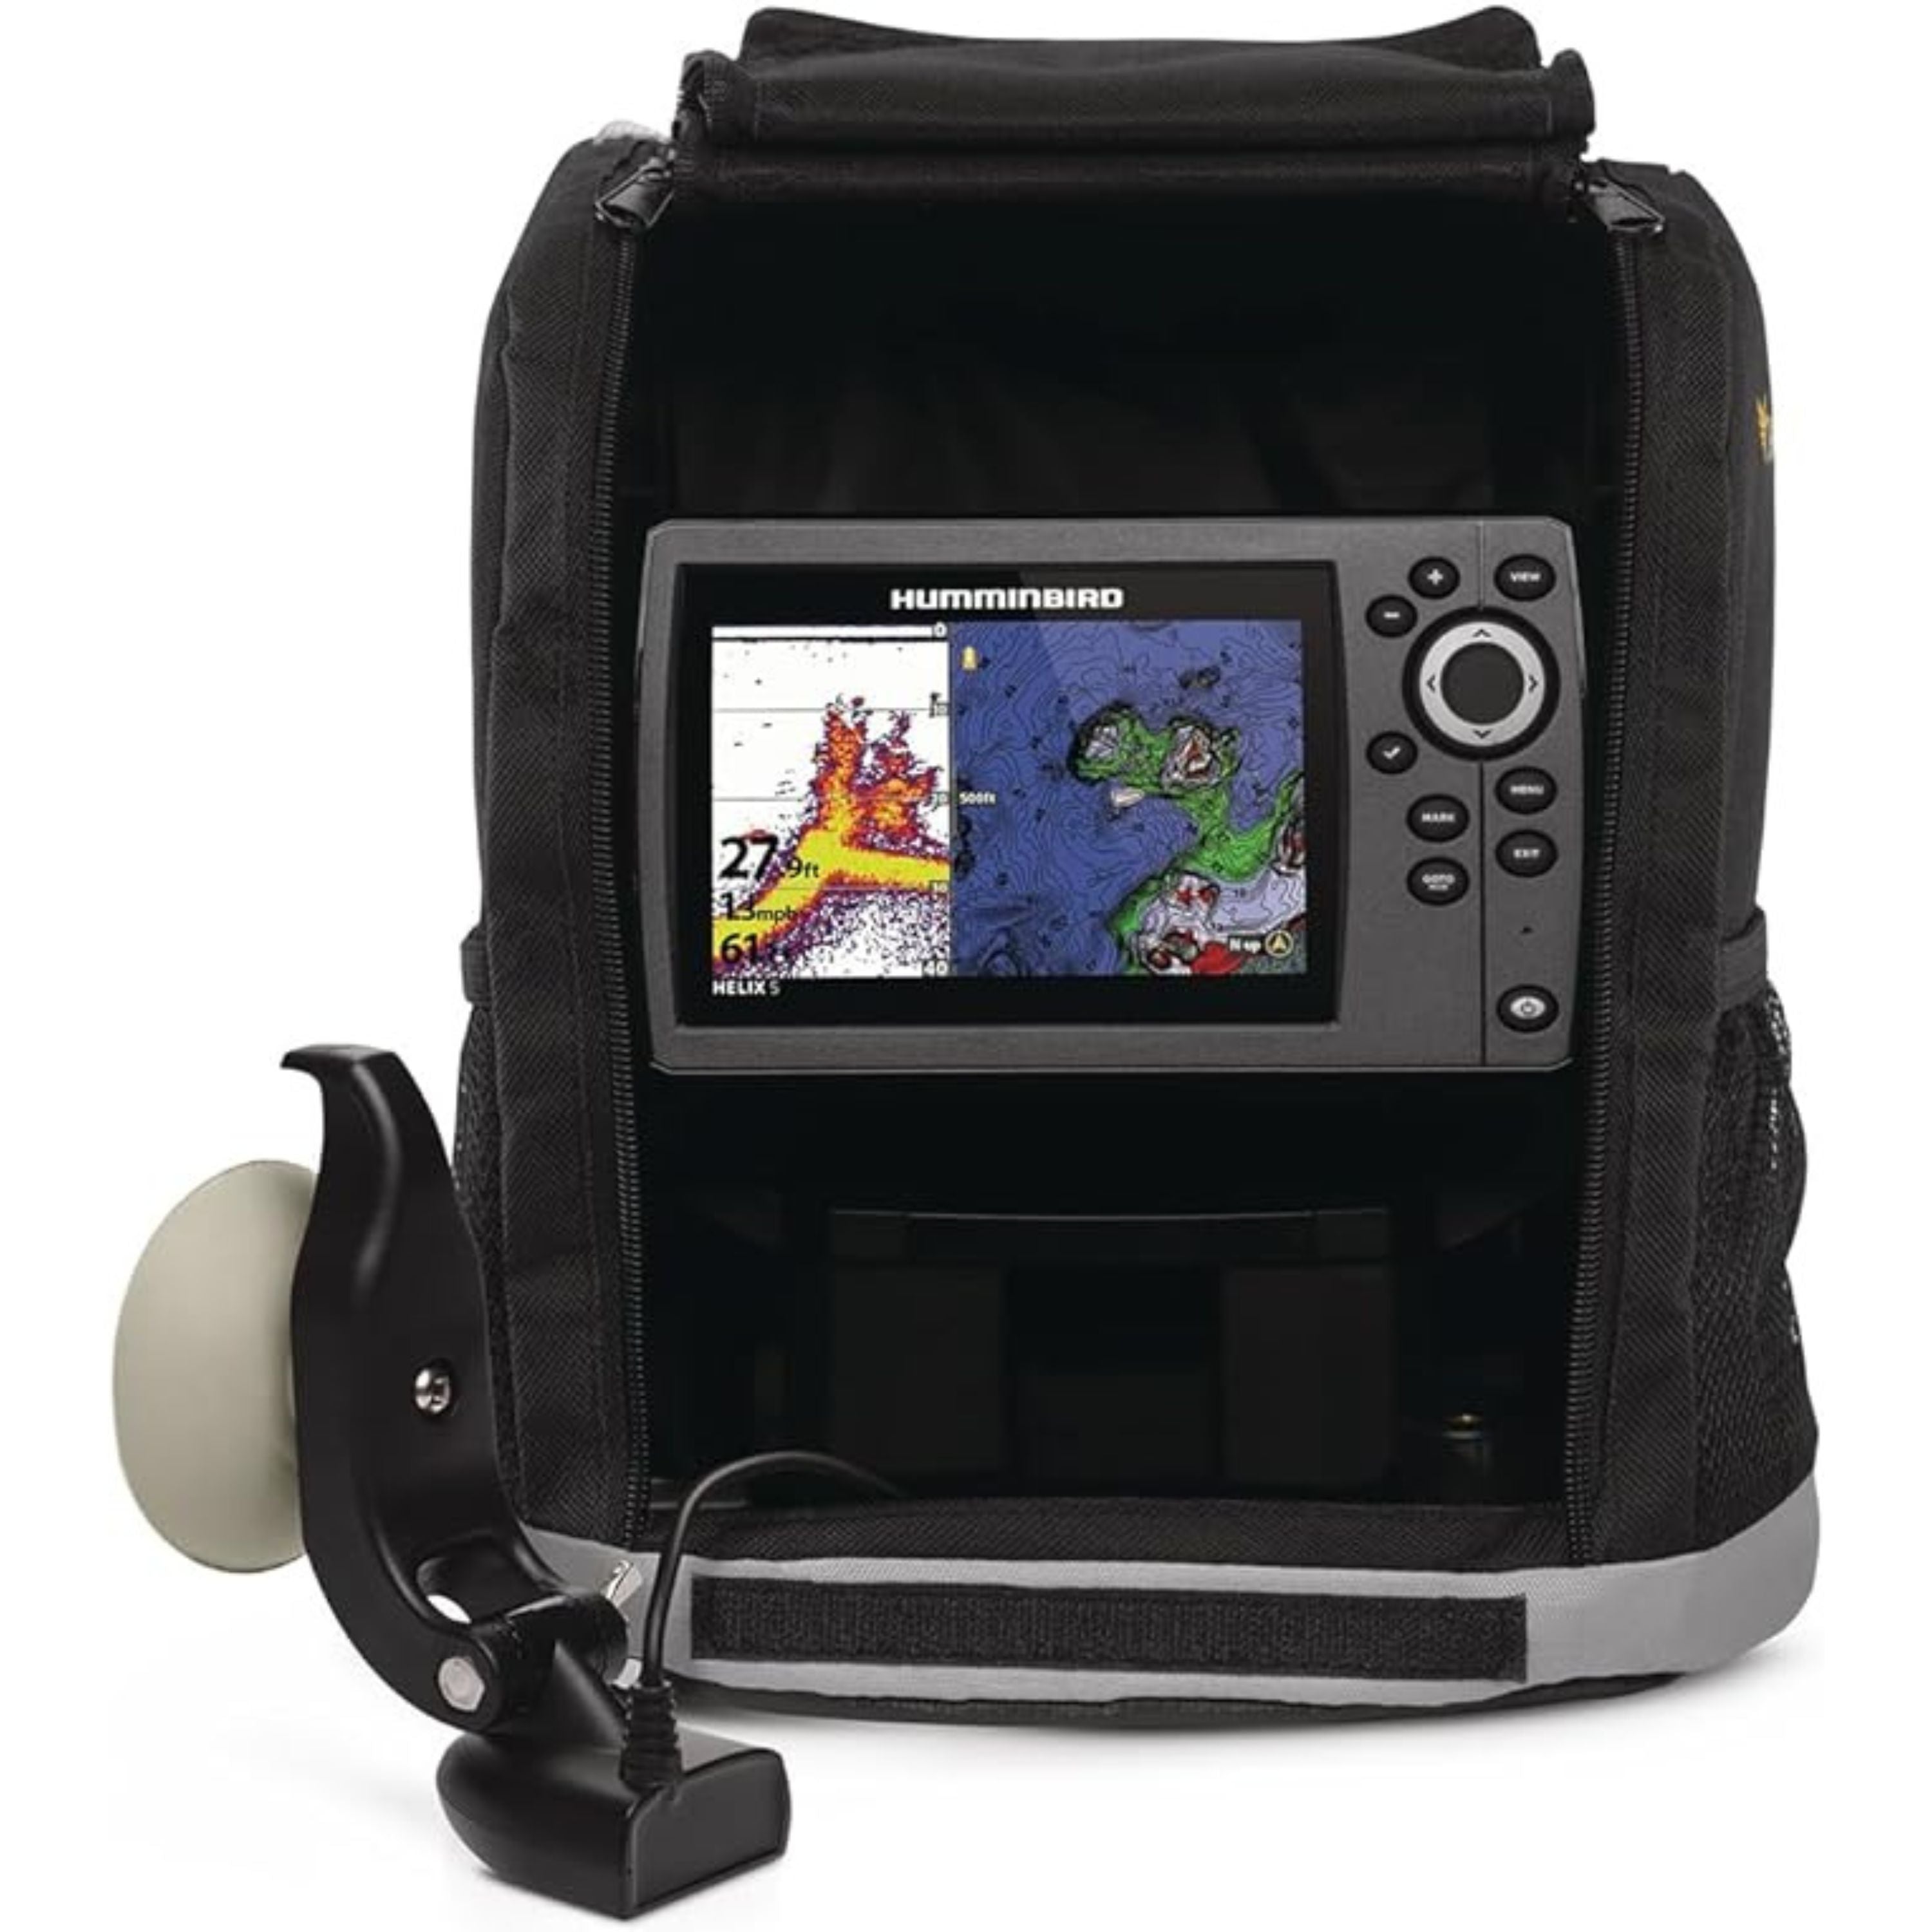 "Helix 5 Chirp GPS G3" Chartplotter portable